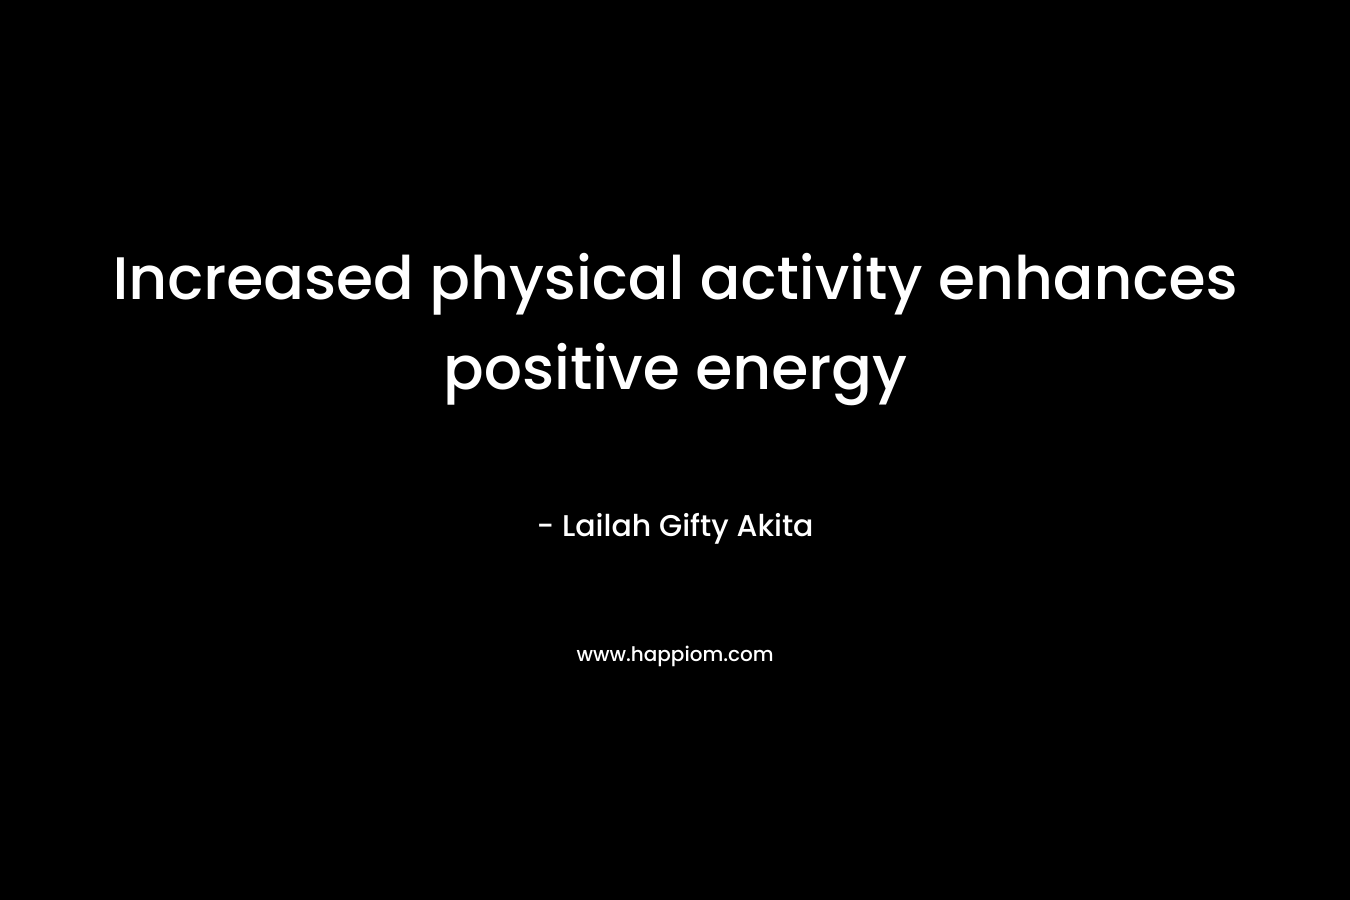 Increased physical activity enhances positive energy